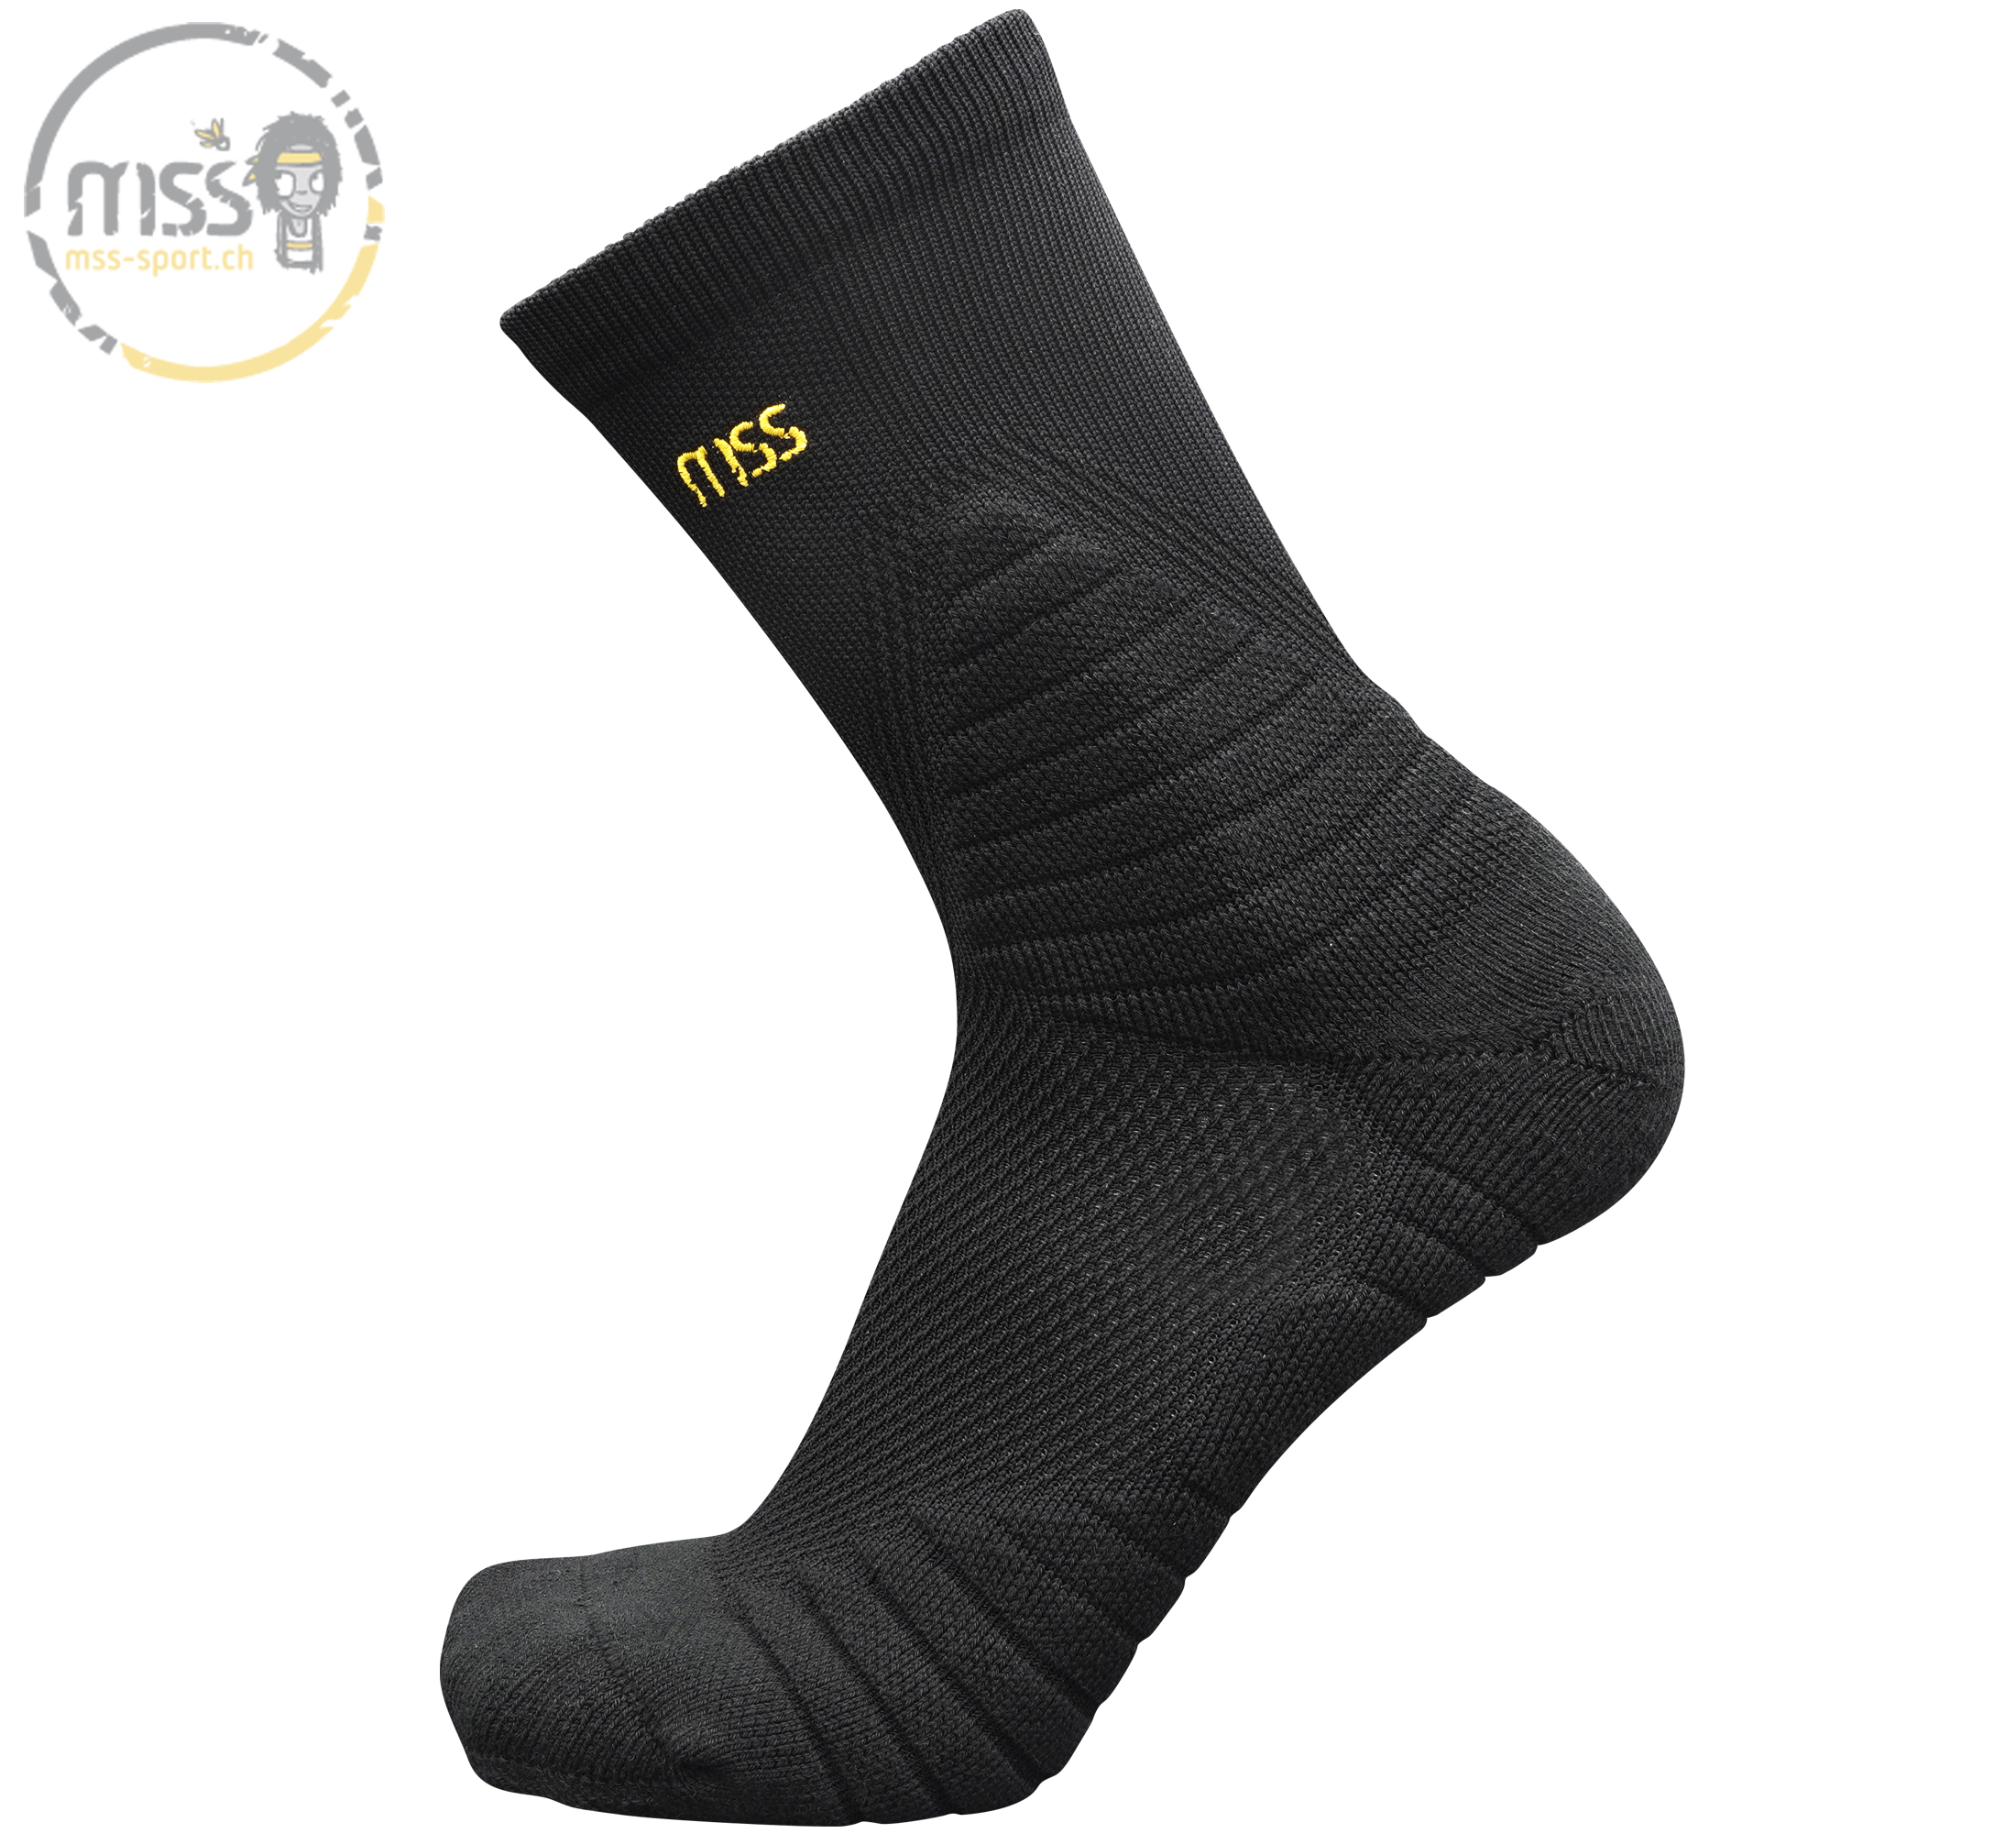 mss-socks Smash 5500 mid black